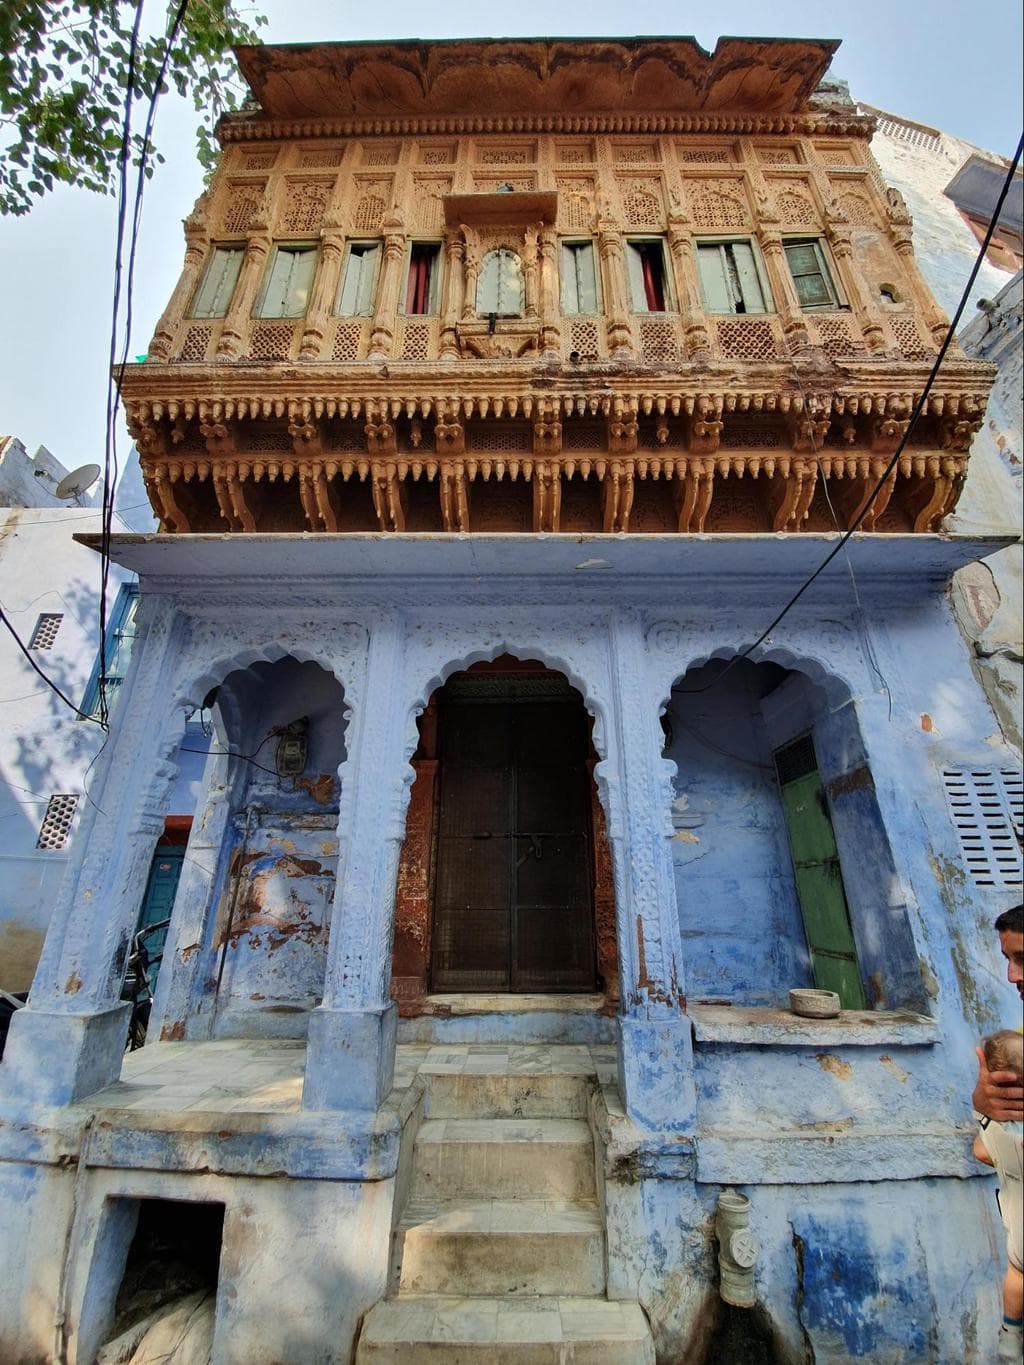 The Blue City of Jodhpur facade